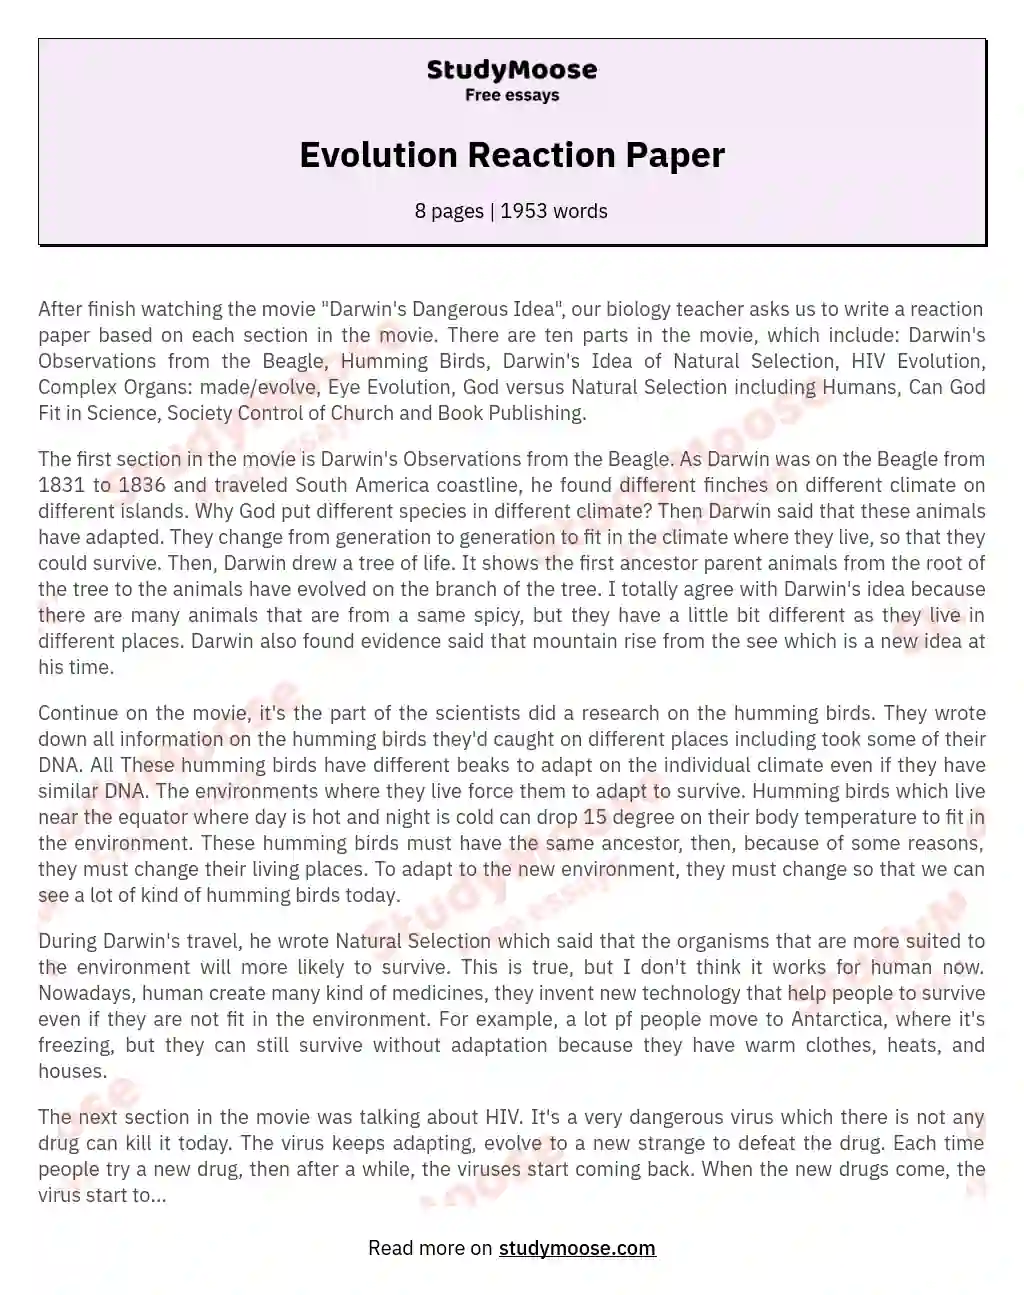 Evolution Reaction Paper essay